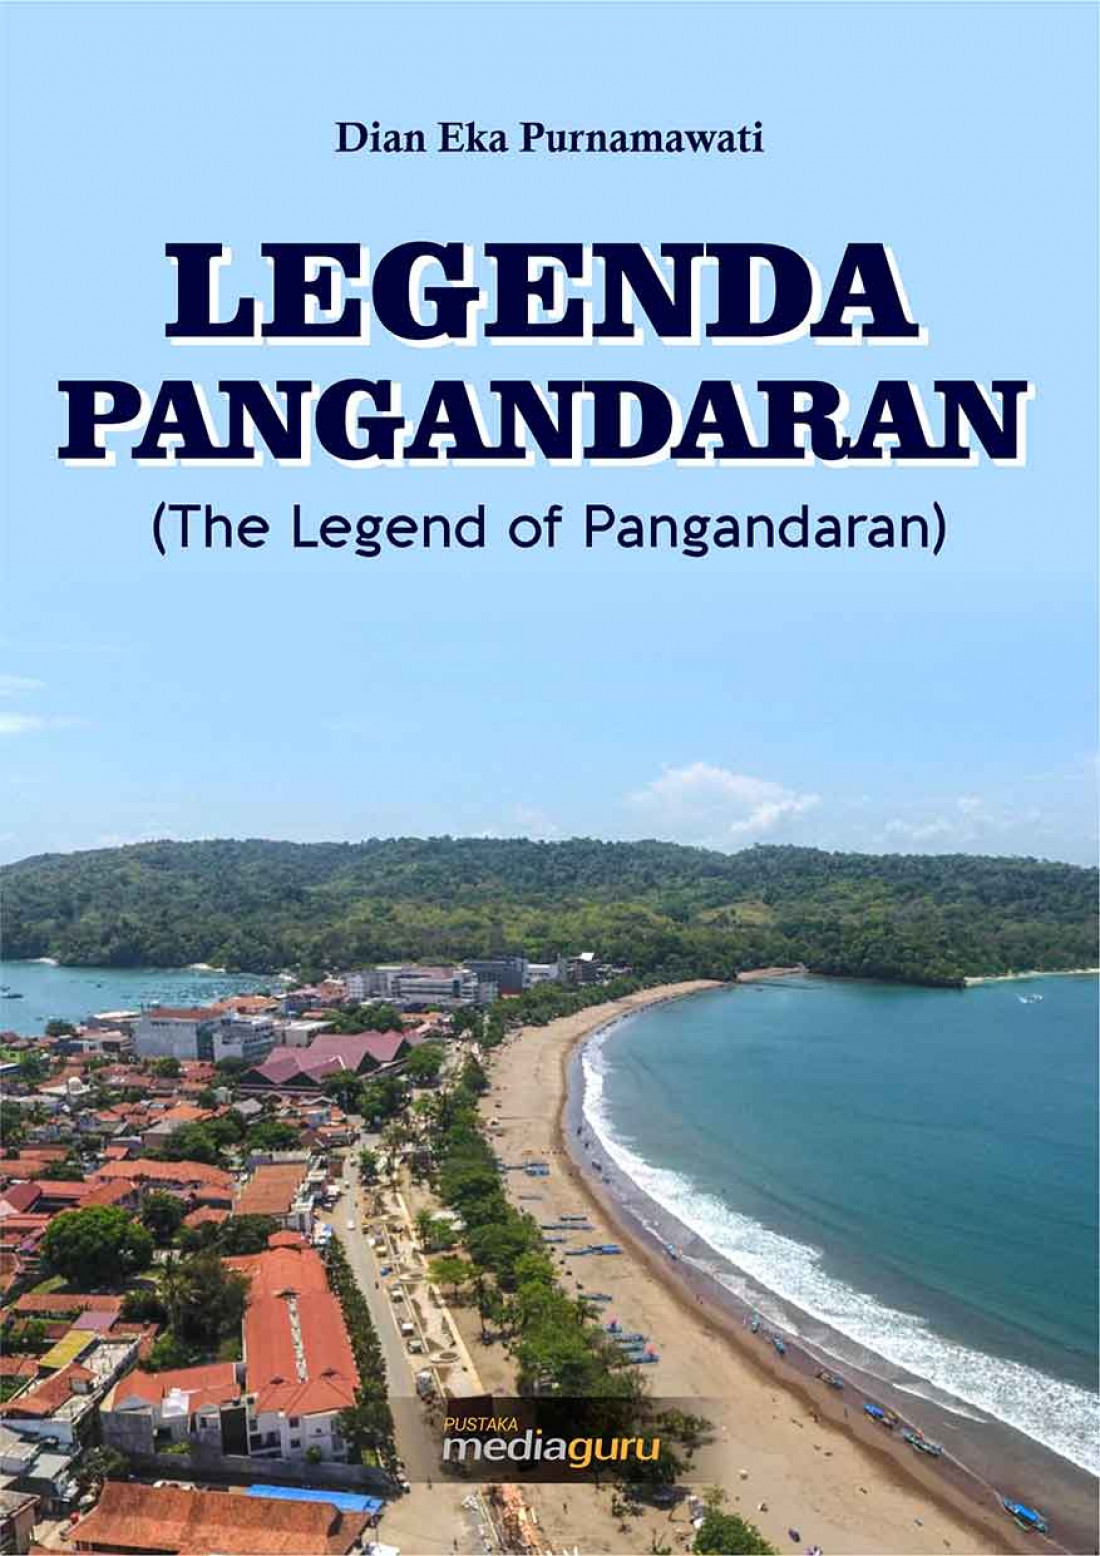 Legenda Pangandaran (The Legend of Pangandaran)